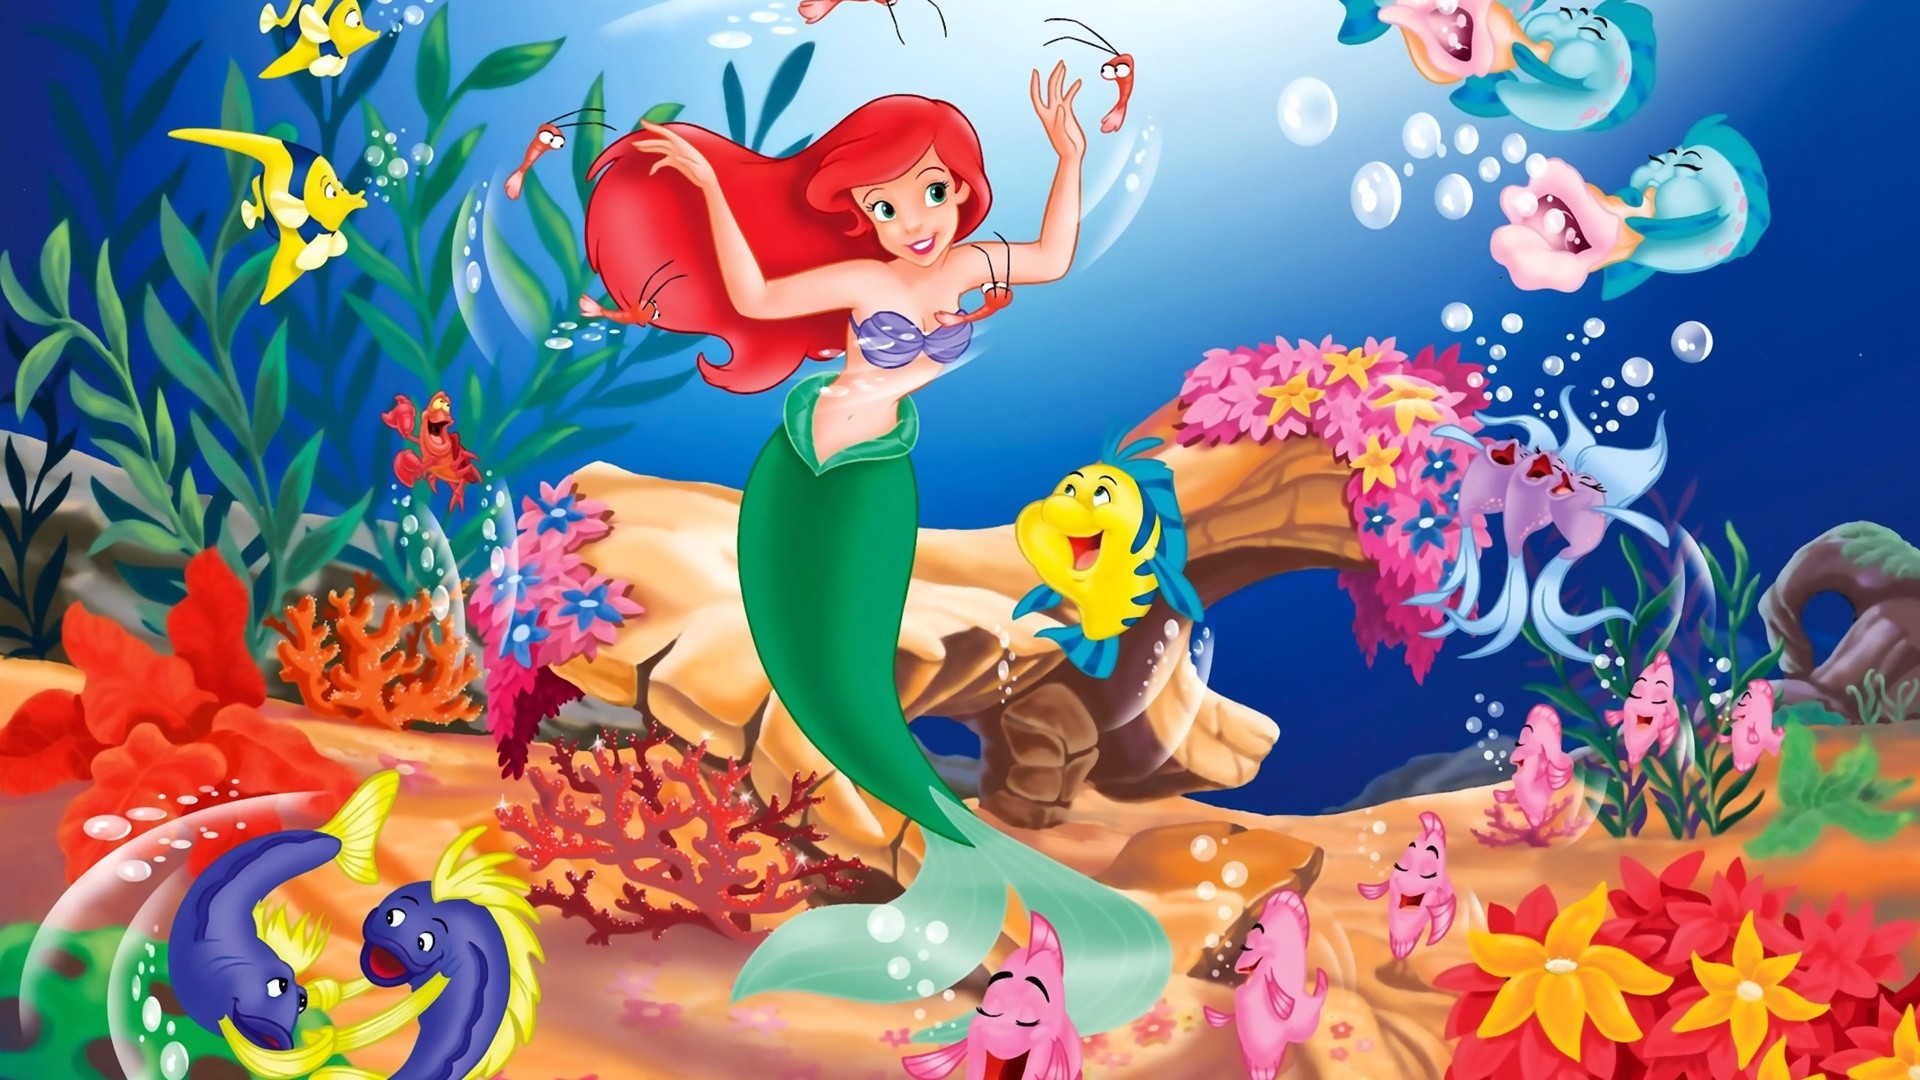 1920x1080 Disney The Little Mermaid Wallpapers | HD Wallpapers